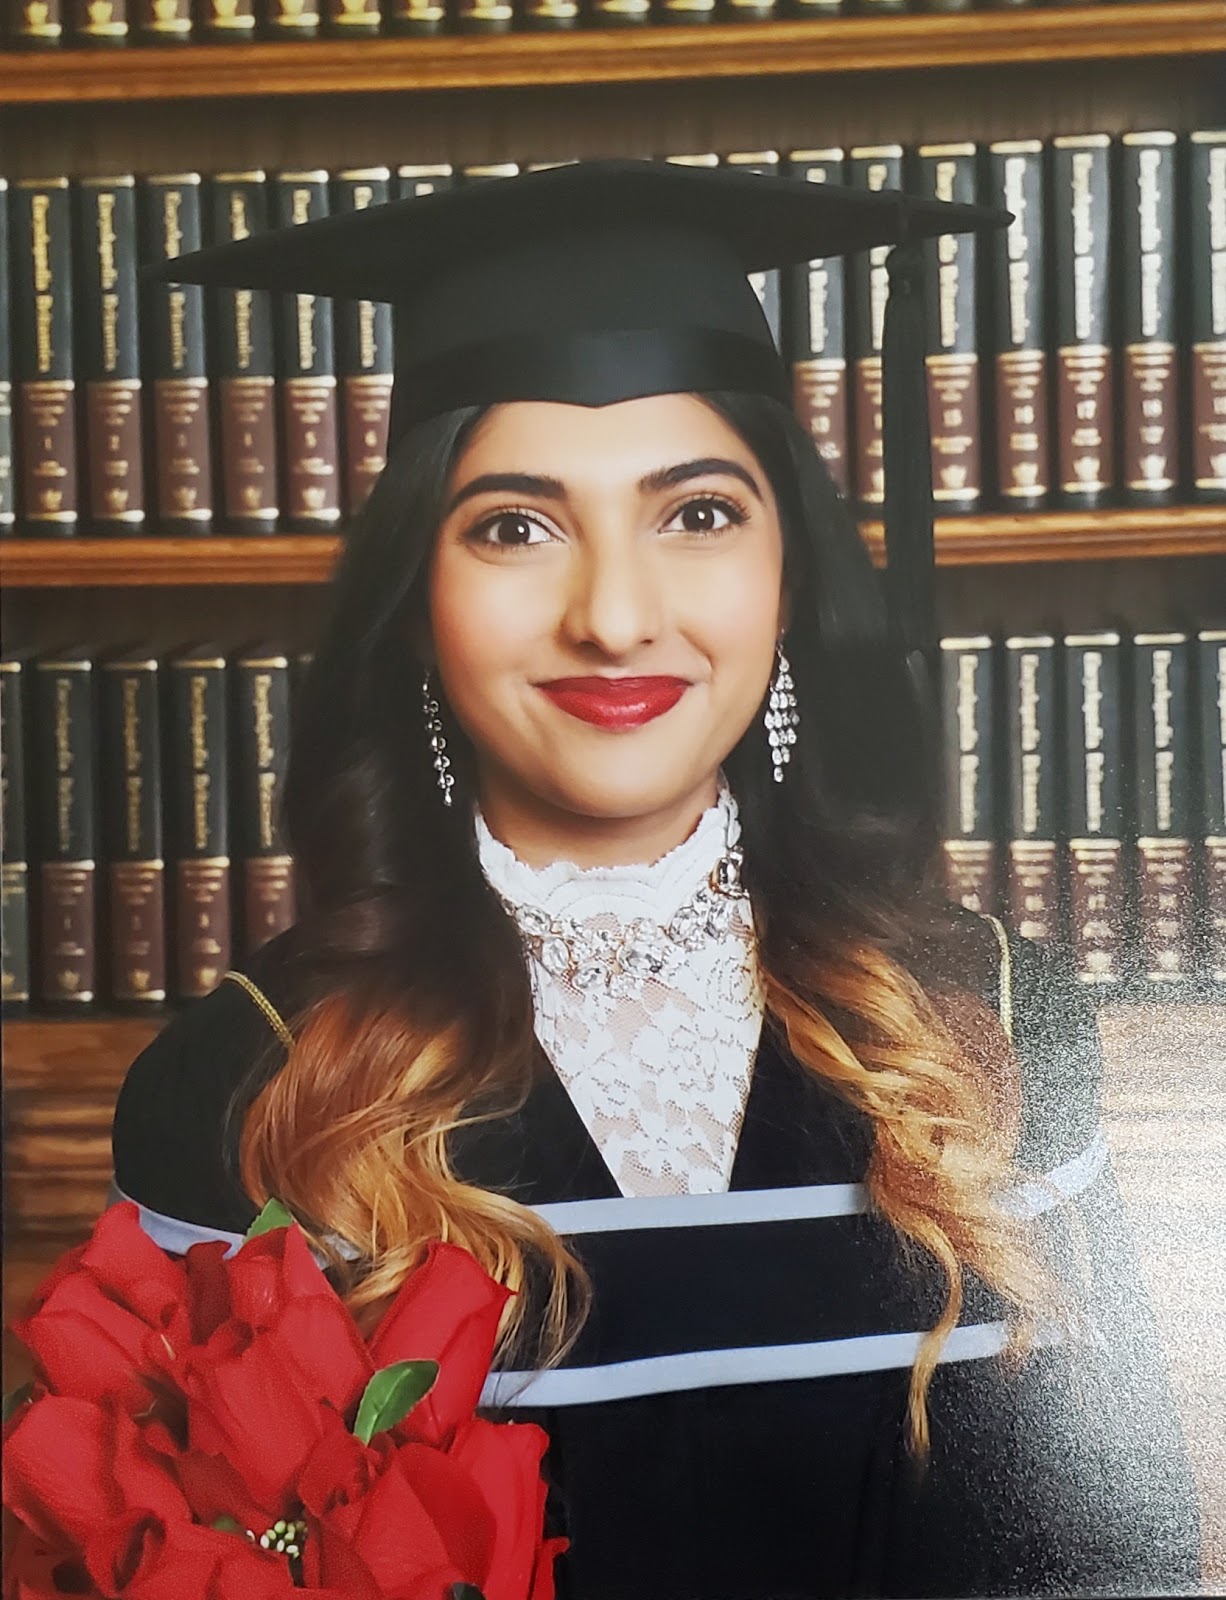 Vriti's Bachelor of Science graduation picture